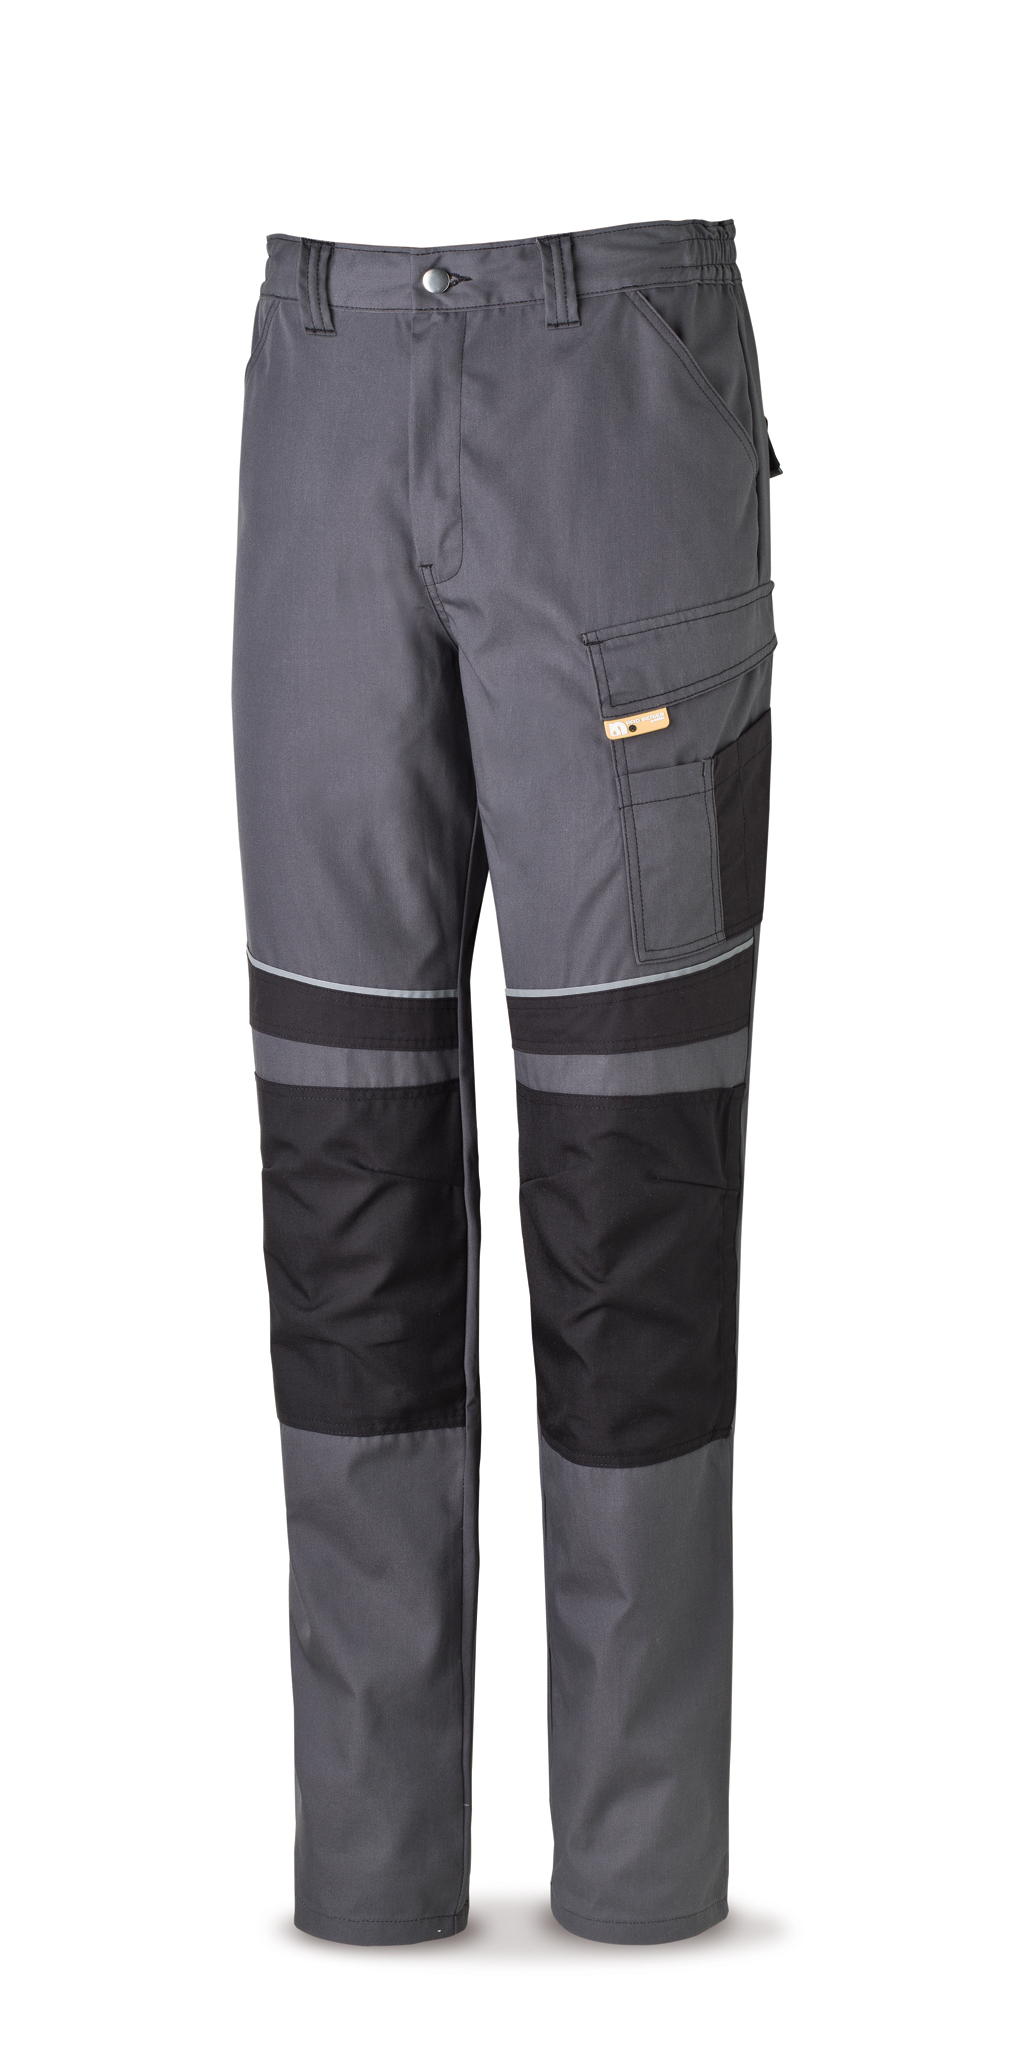 588-PNEG Workwear Pro Series 245gr. Canvas tergal trousers. Grey/ Black.